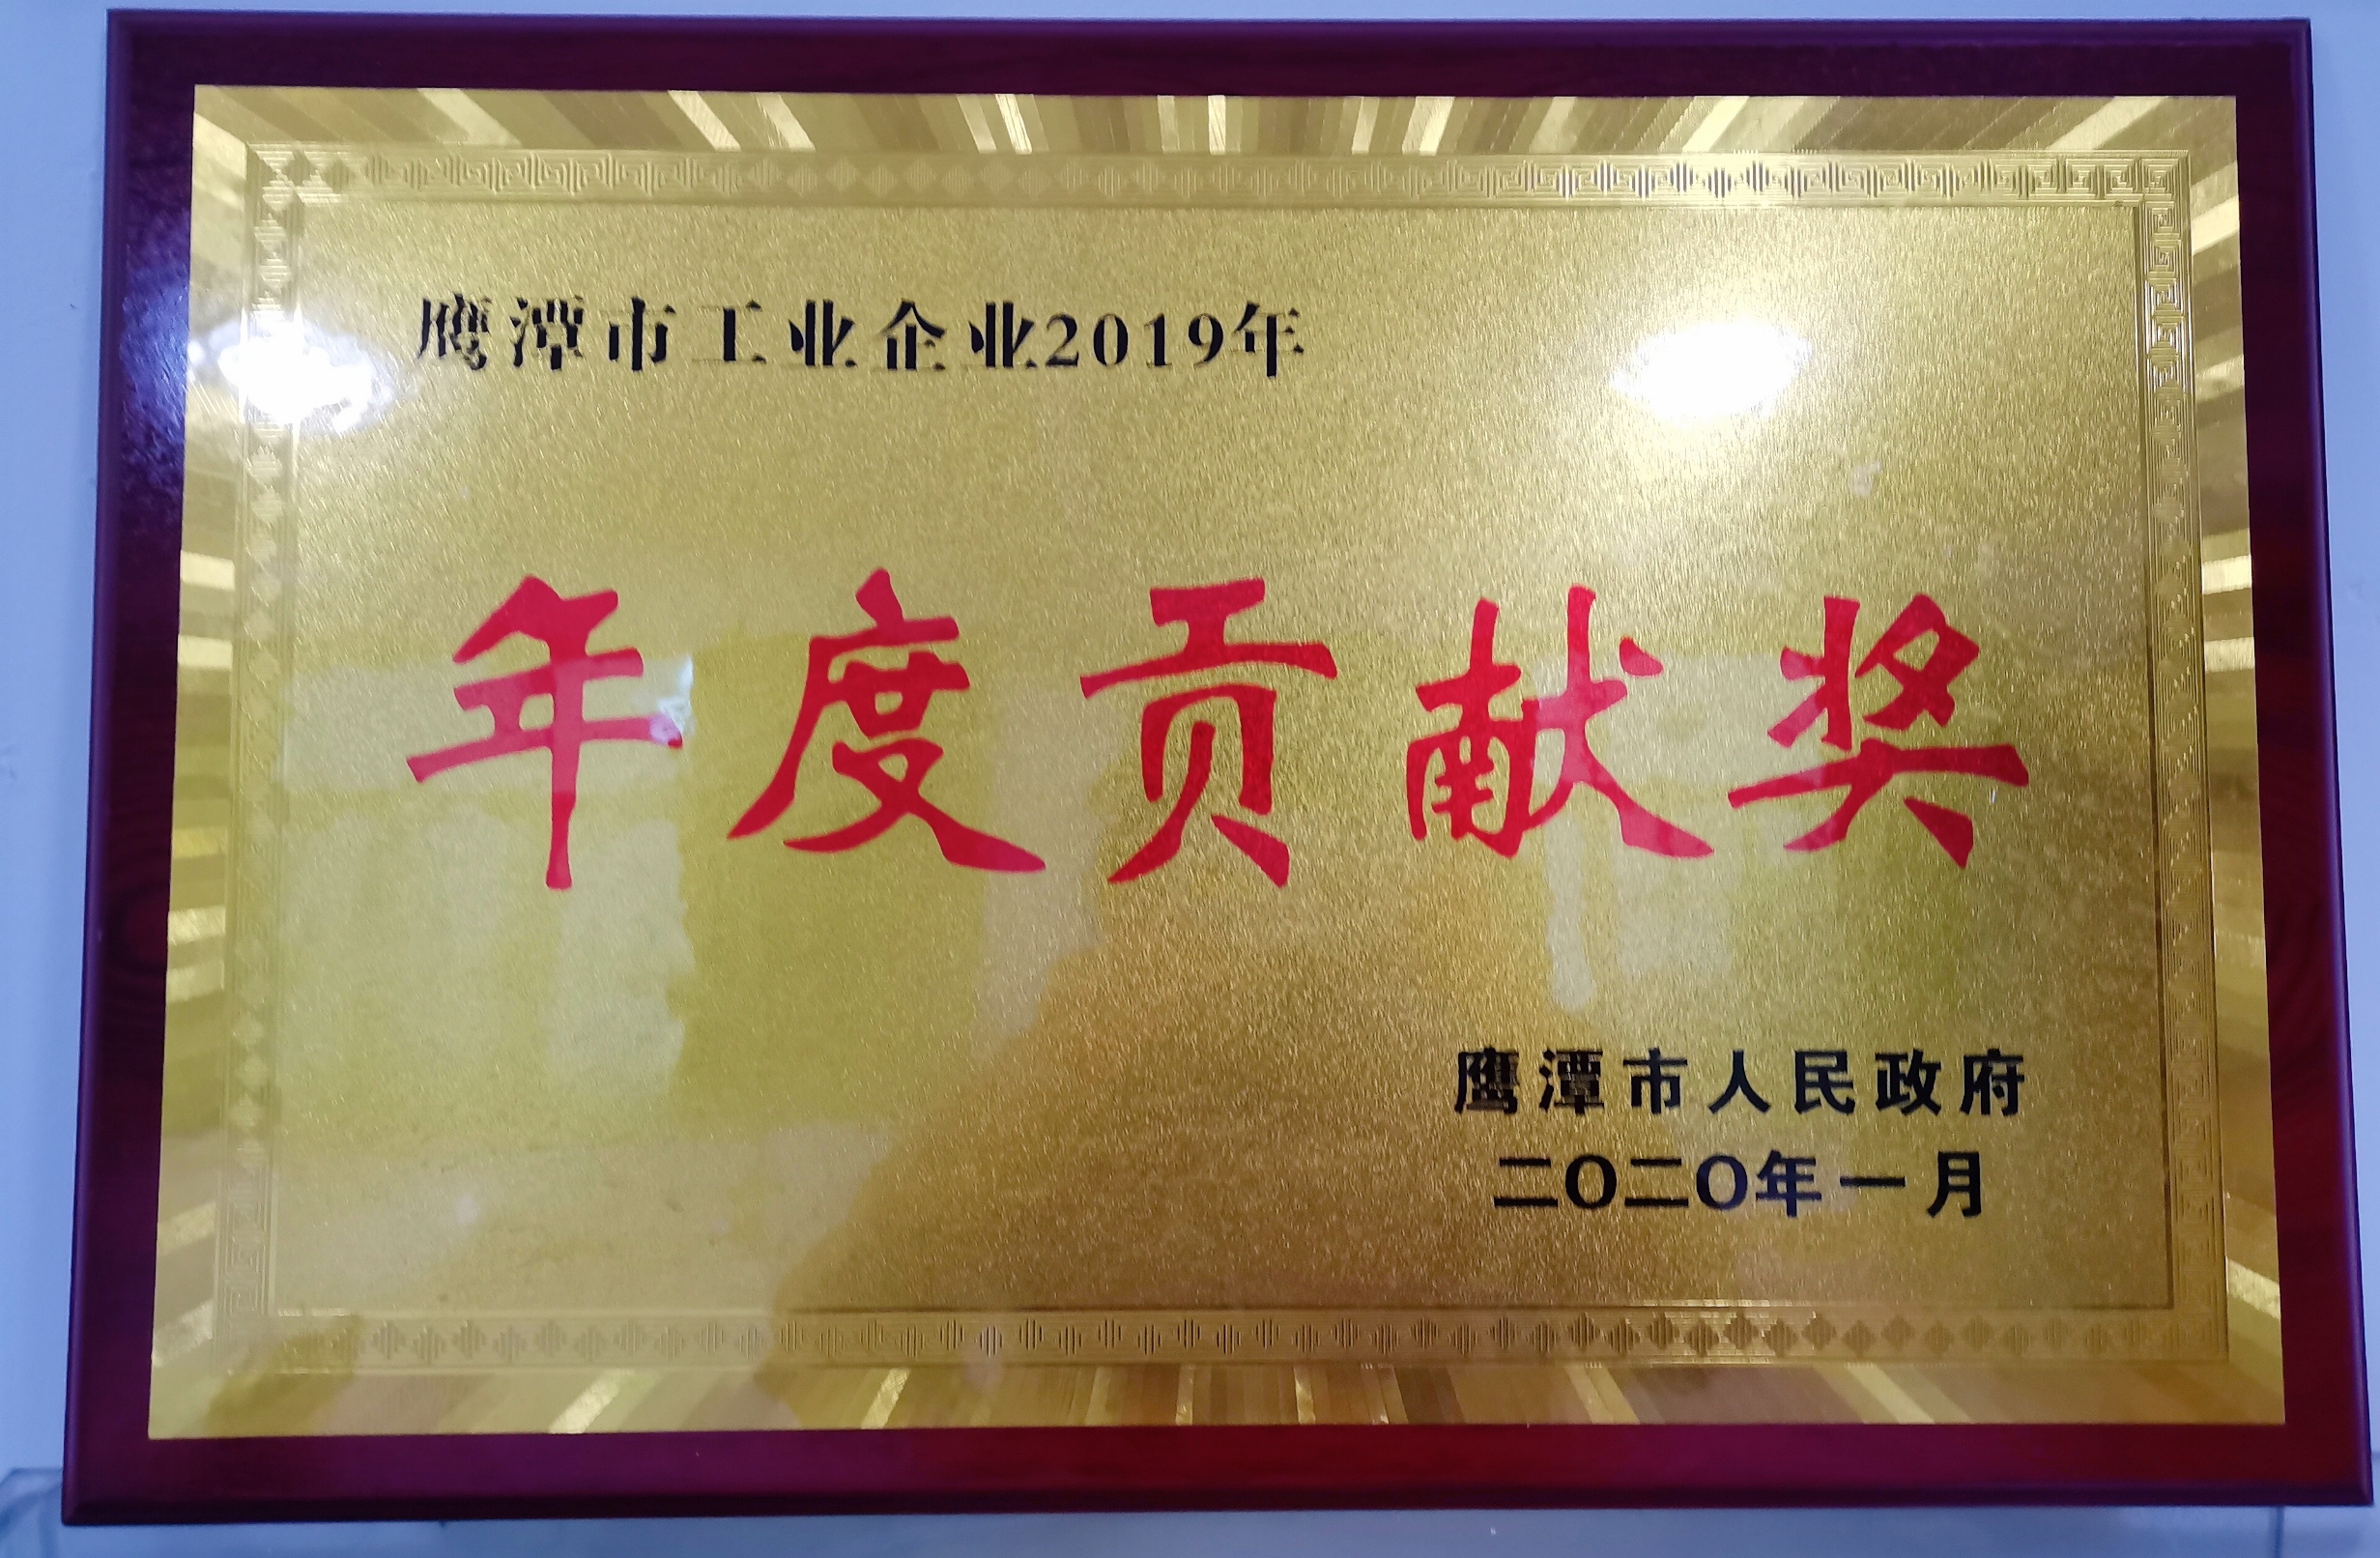 Annual contribution award